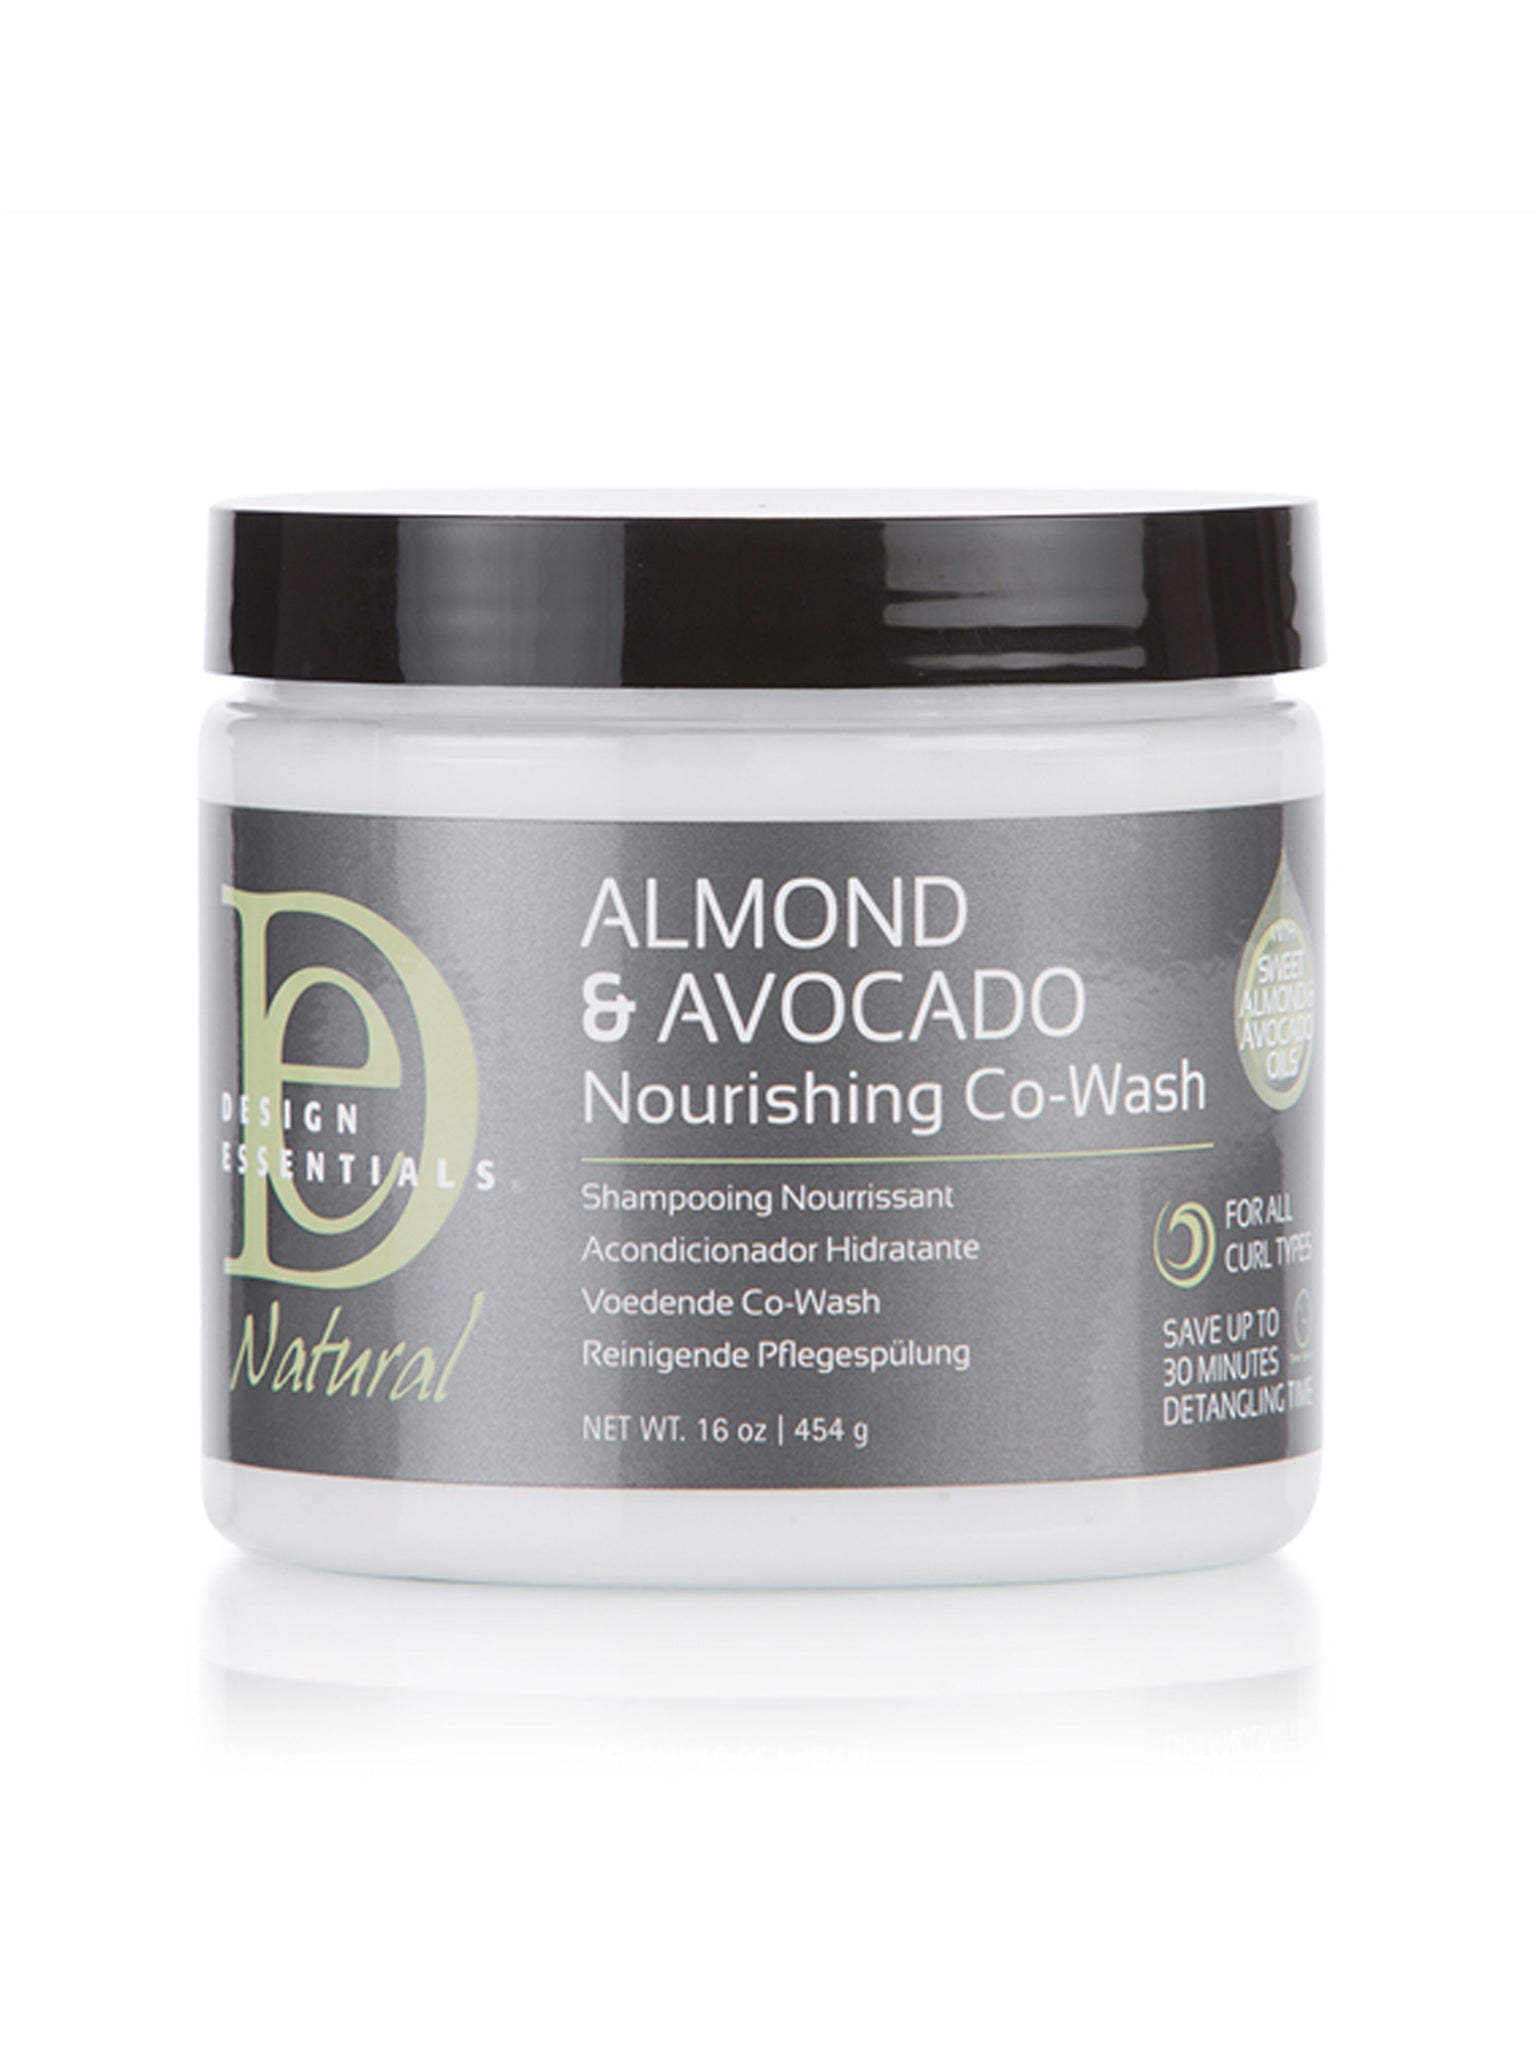 Design Essentials Natural Almond & Avocado Nourishing Co-Wash - 16 oz